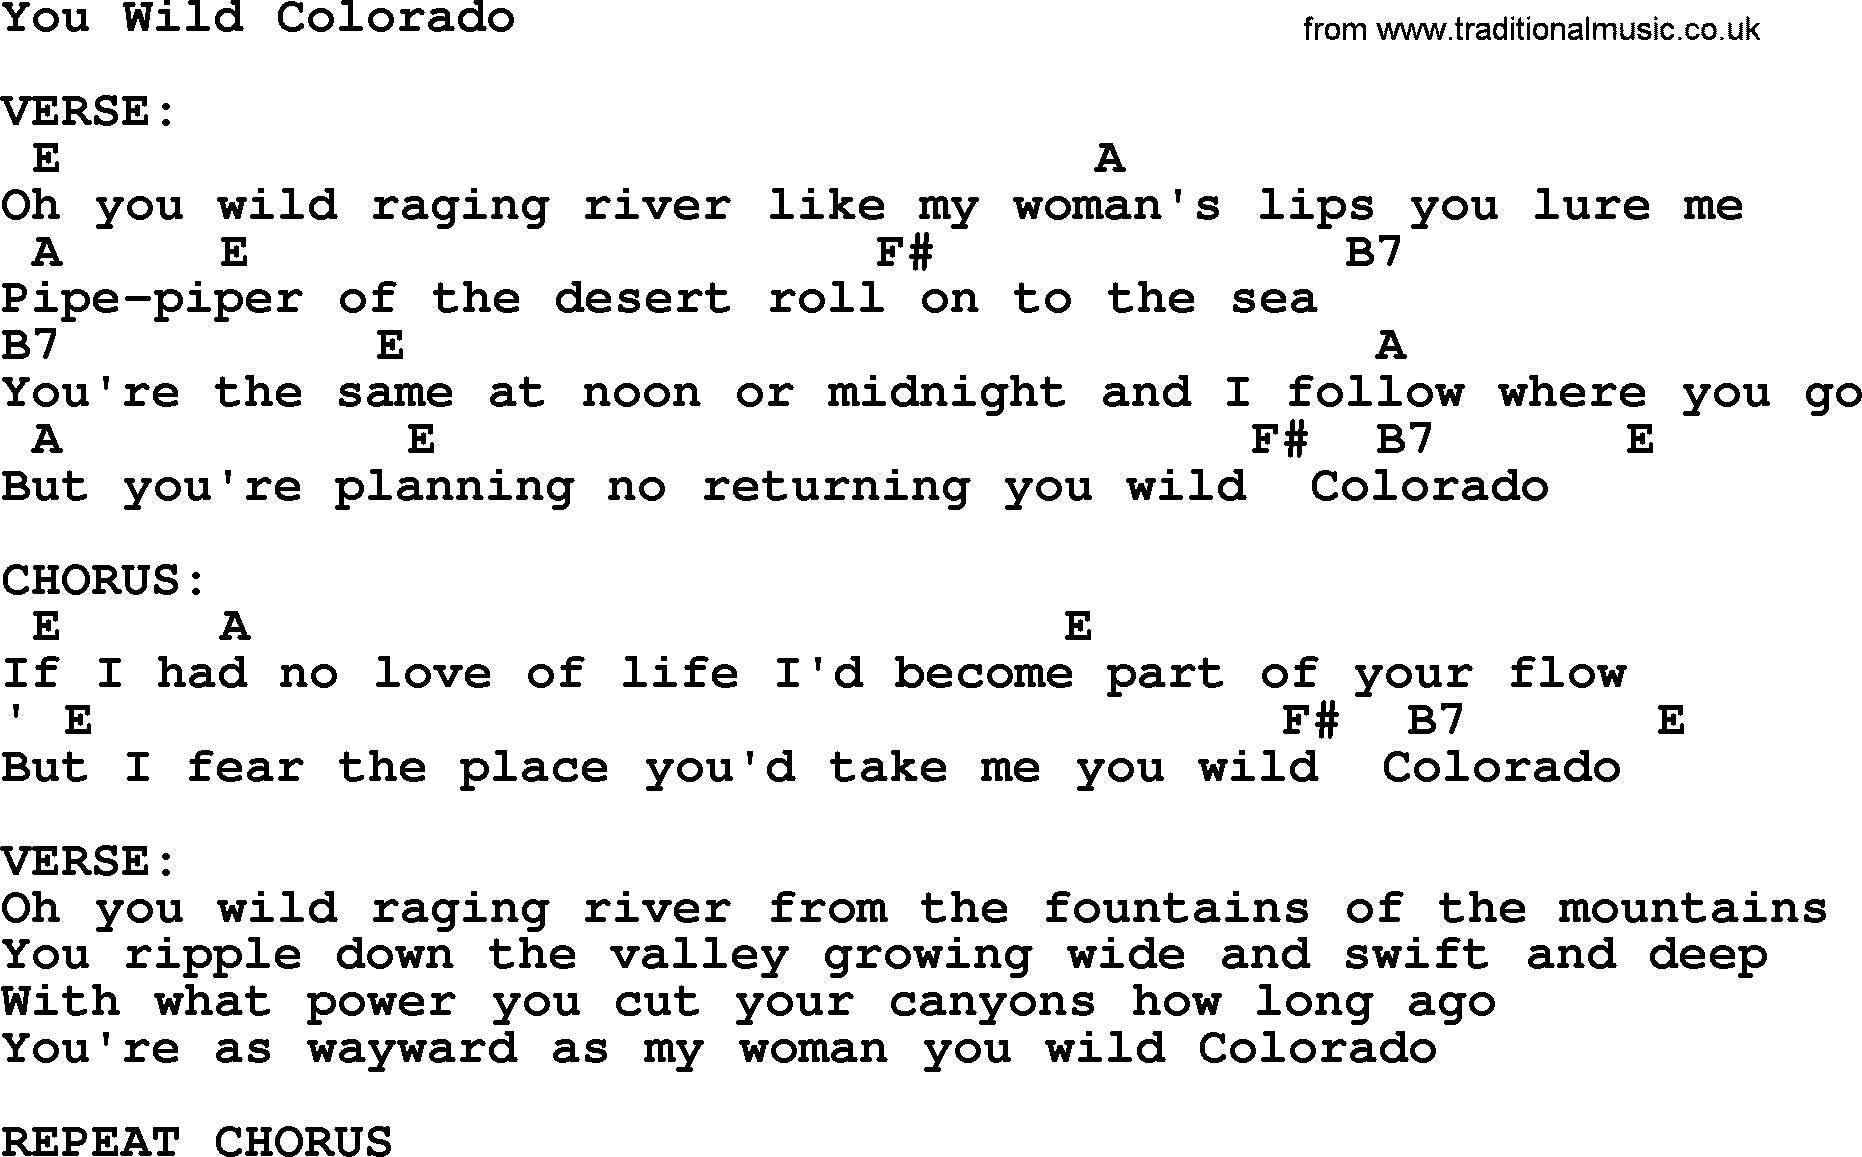 Johnny Cash Song You Wild Colorado Lyrics And Chords